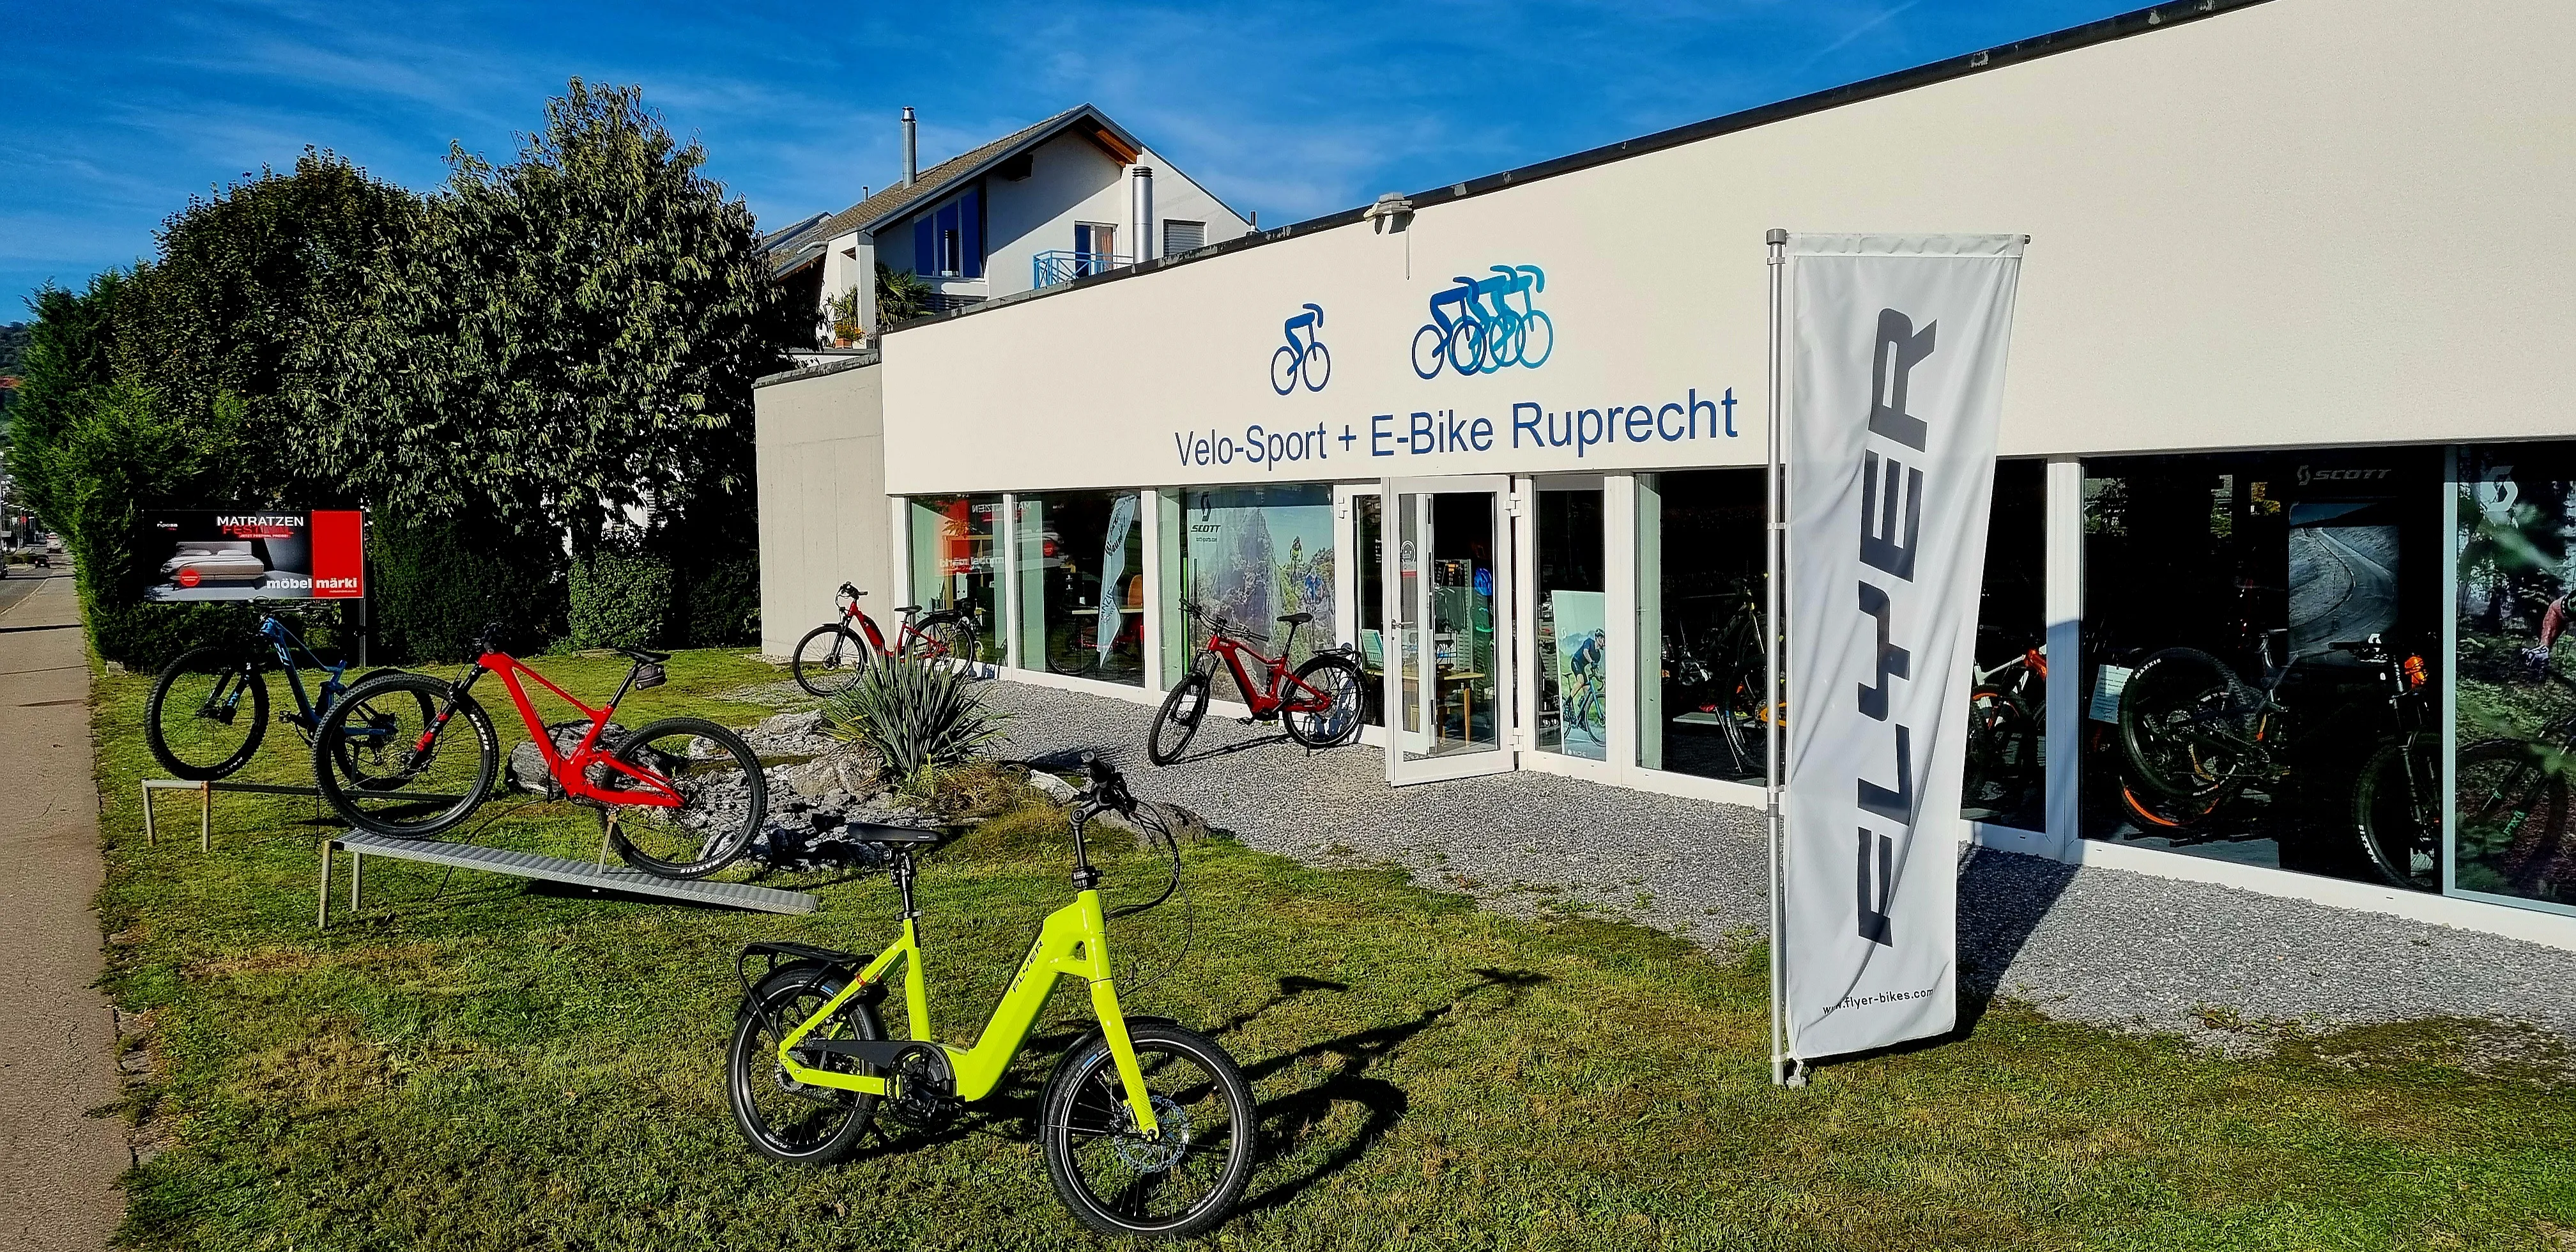 Velo Sport+E-Bike Ruprecht